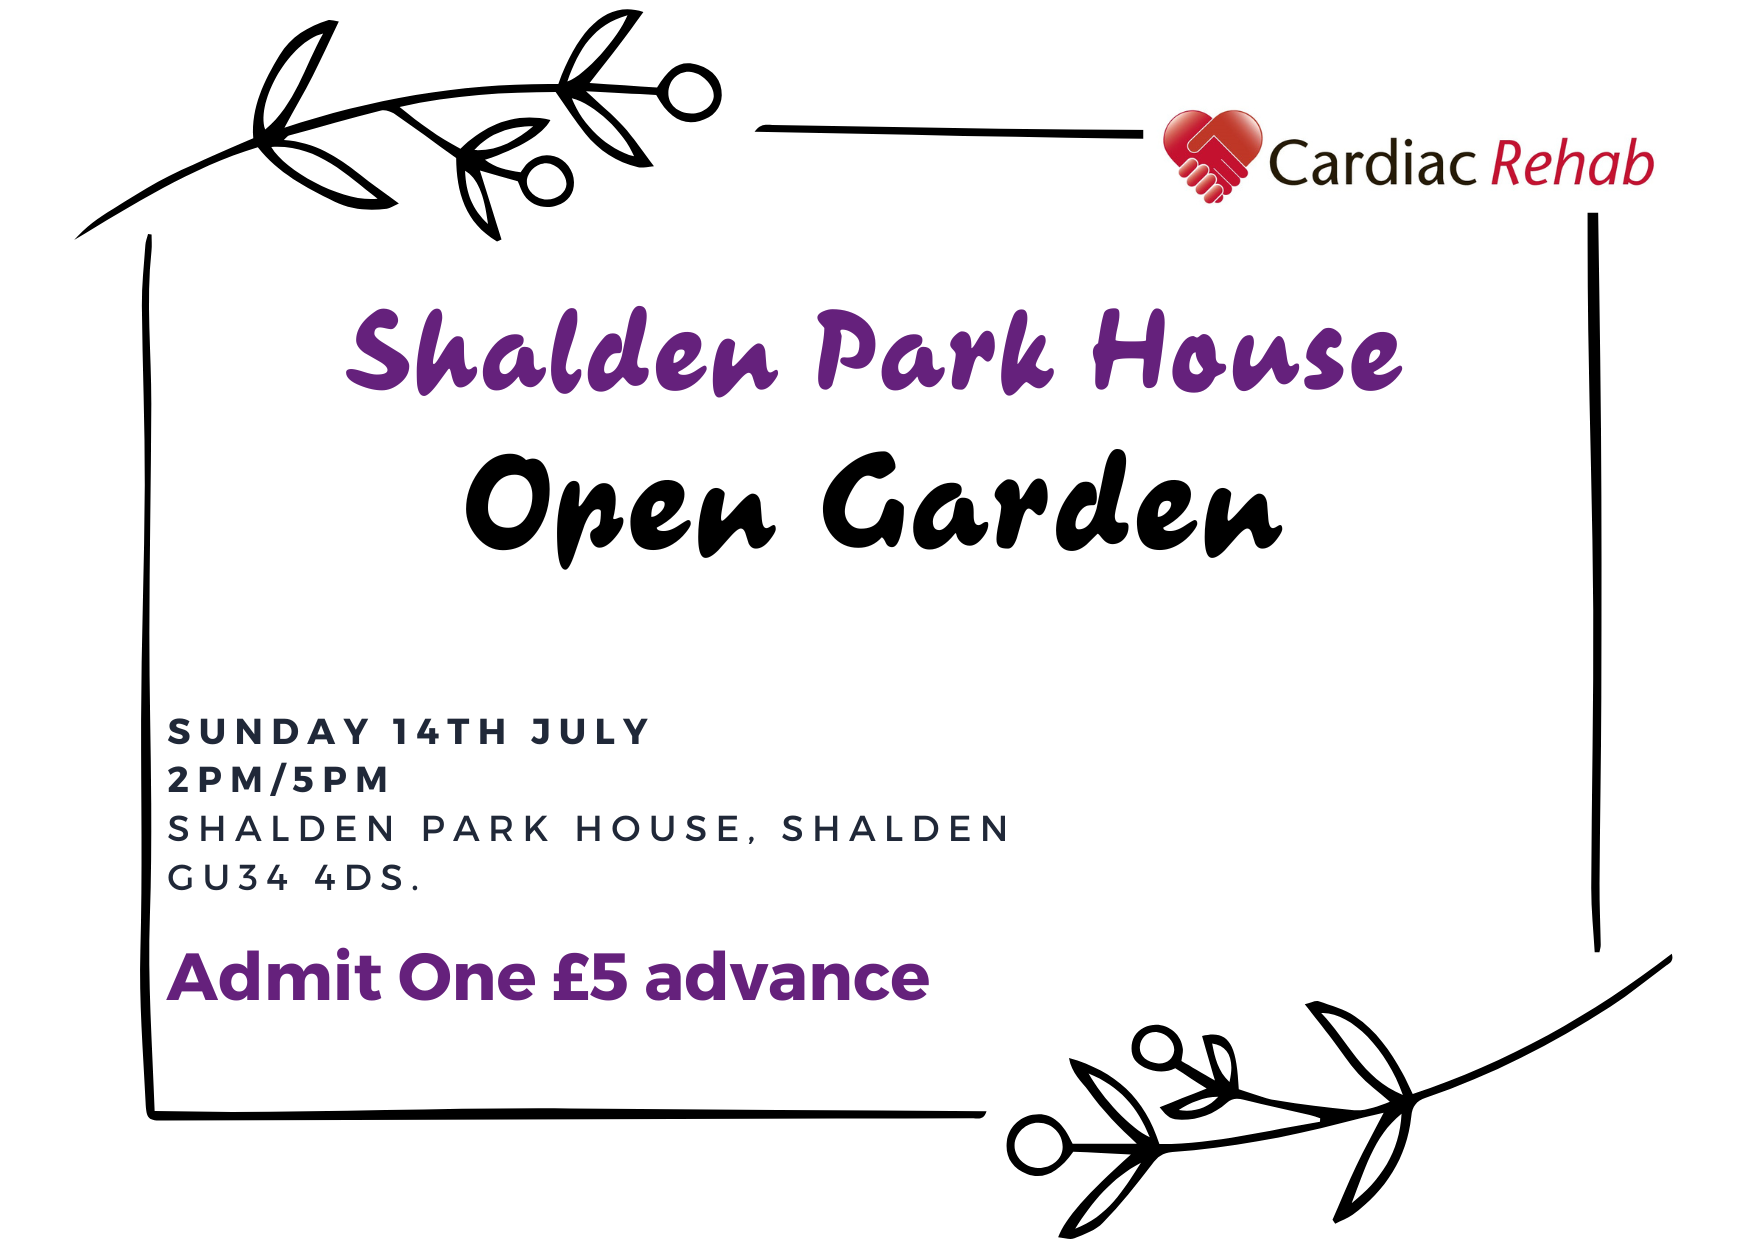 An image of Open Garden – Shalden Park House